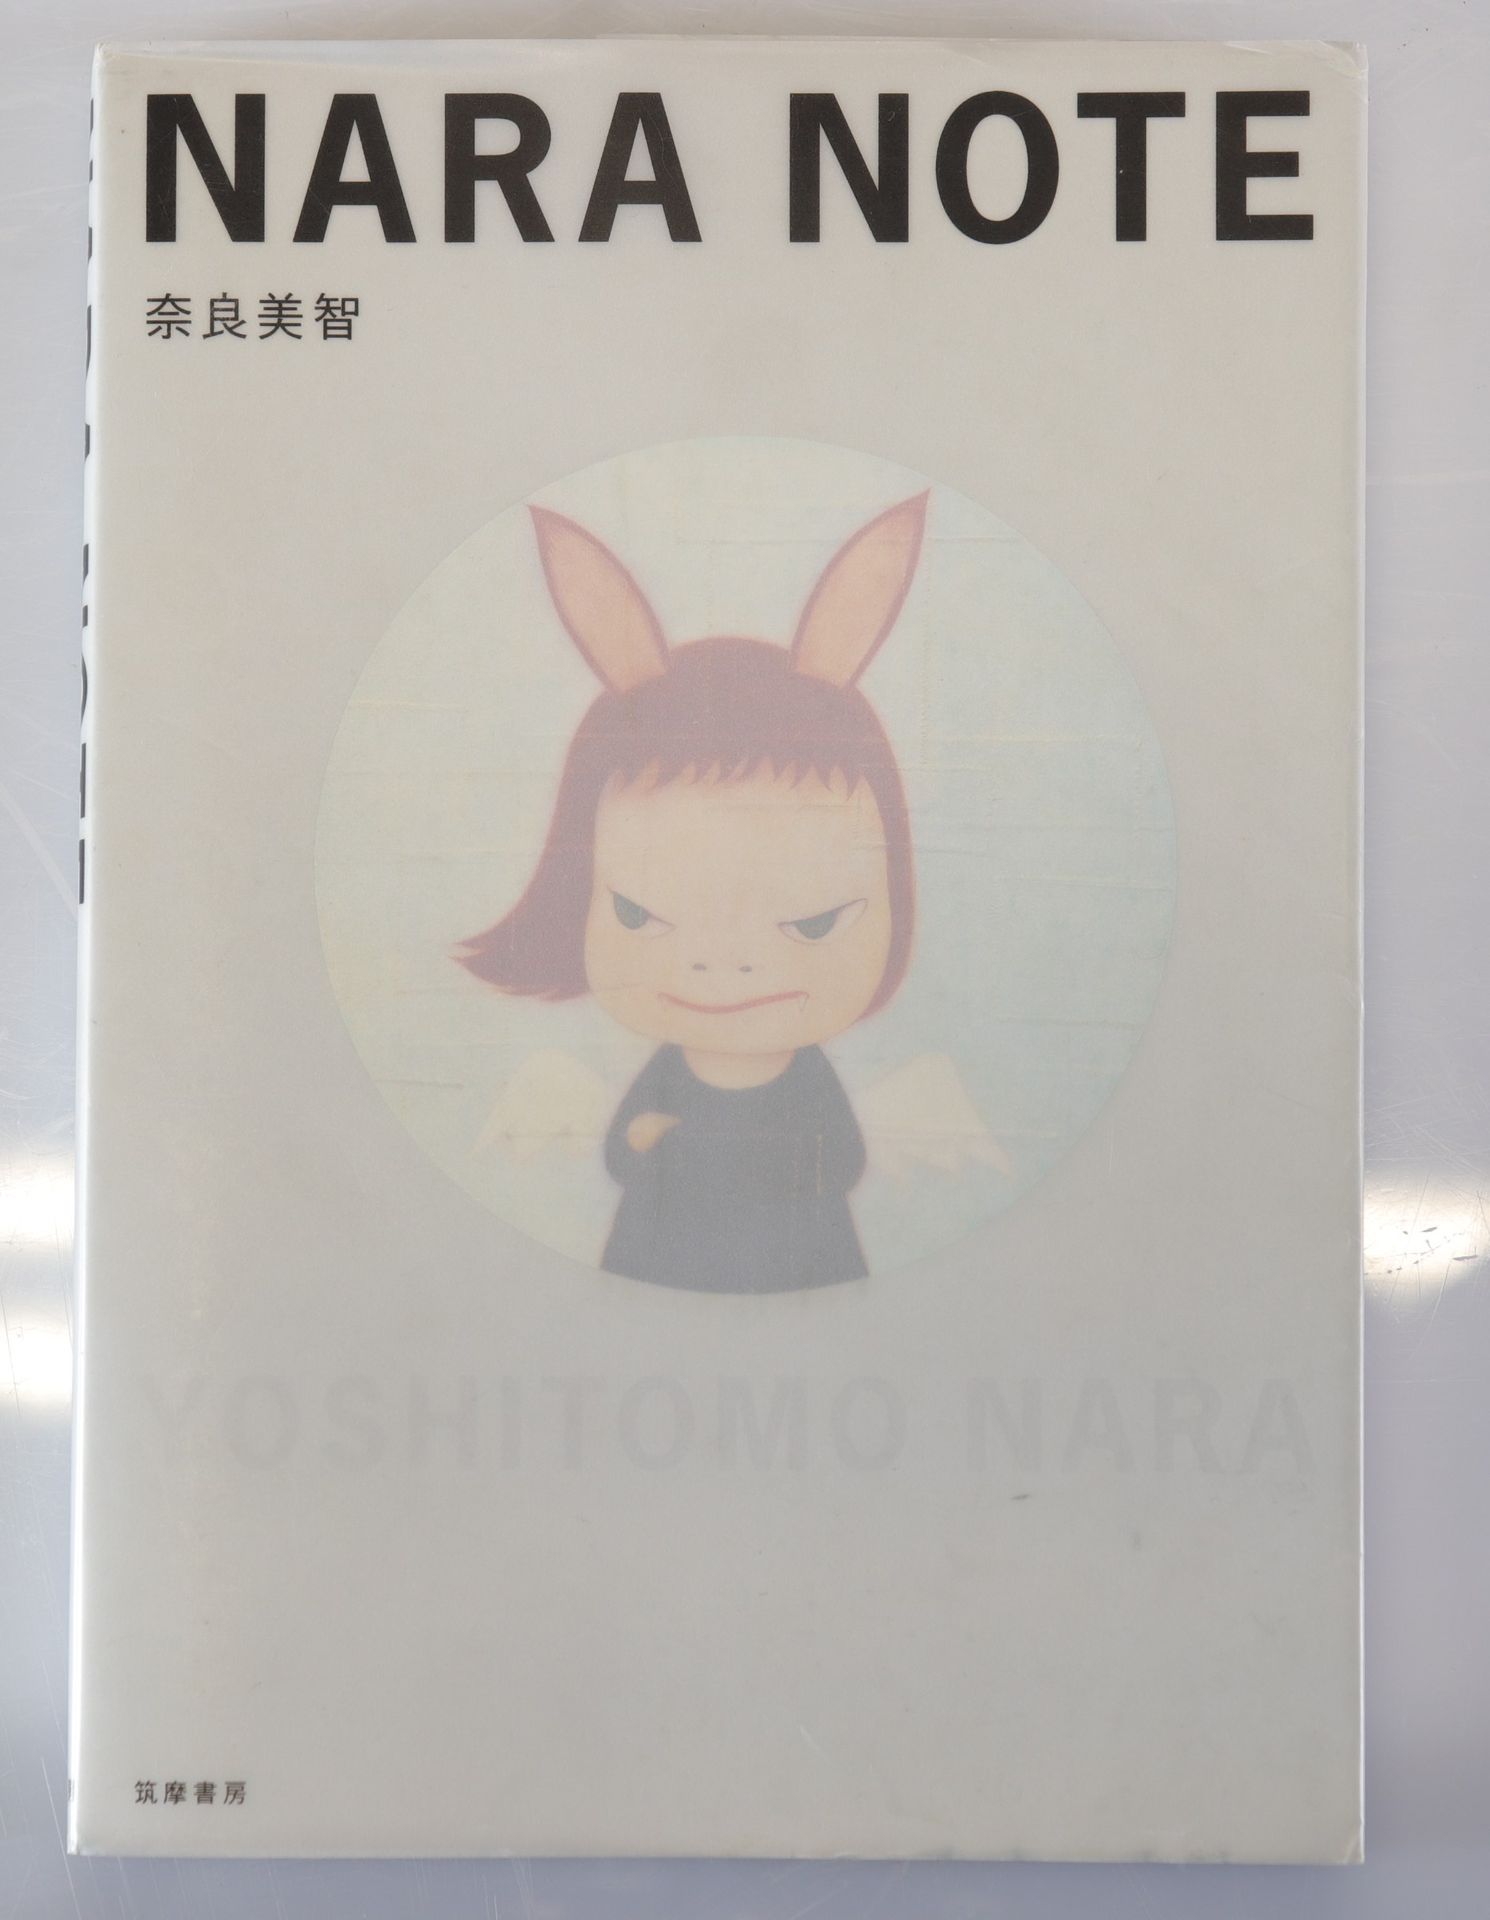 Null 奈良美智（Yoshitomo Nara），（attr）。书中 "奈良笔记 "的献词是用毛笔画的原稿，用毛笔签名。
重量：277克
地区：日本
尺寸: &hellip;